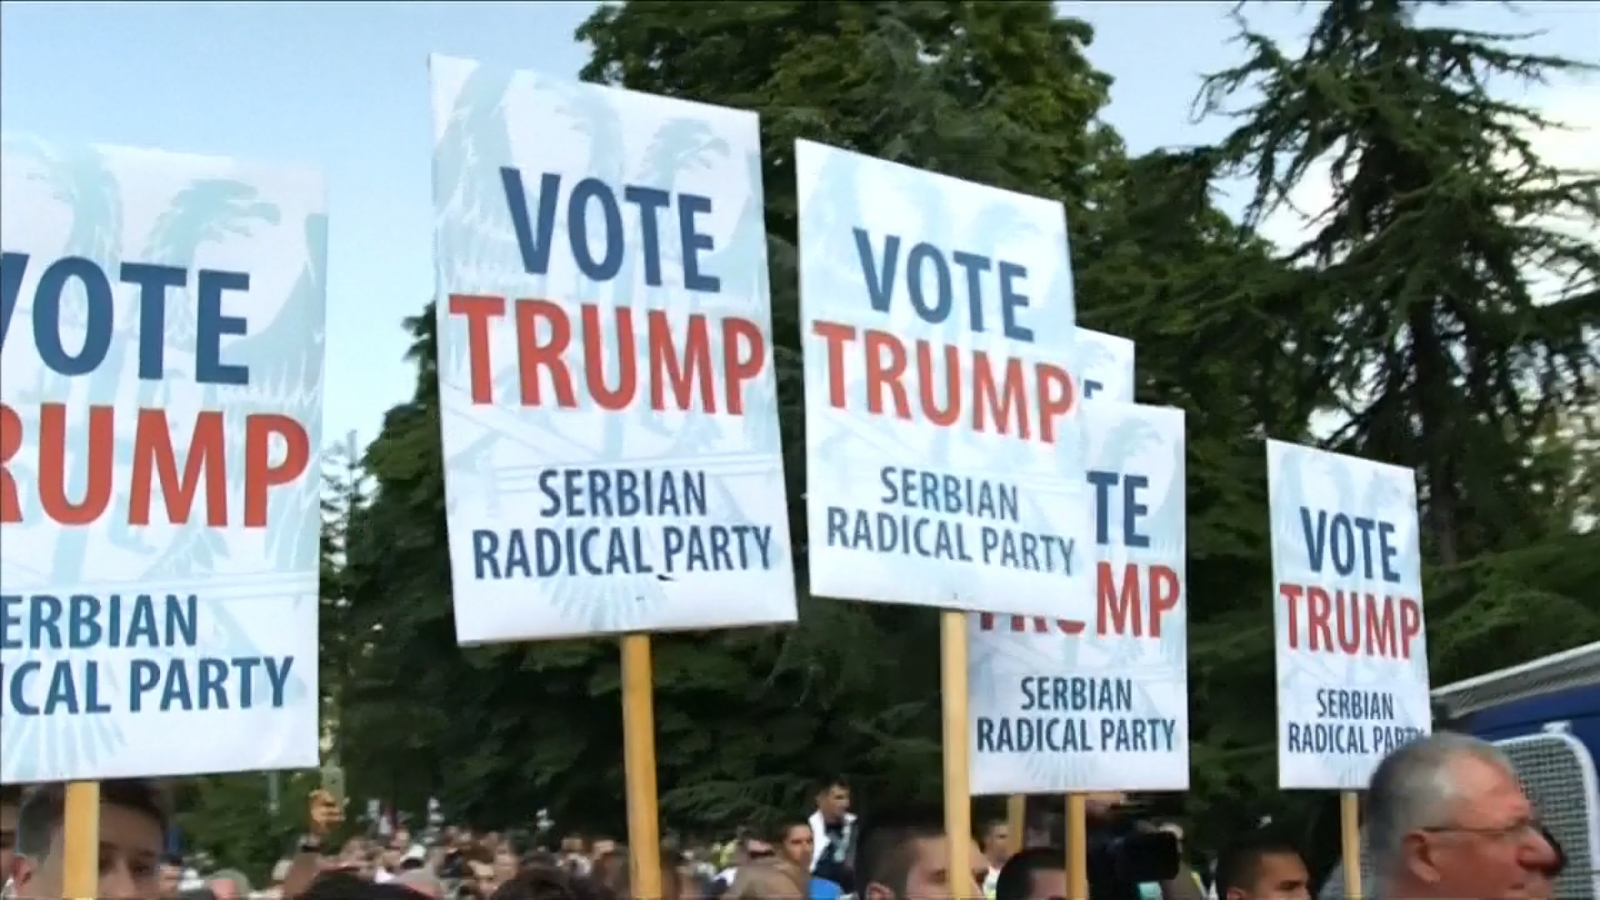 https://d.ibtimes.co.uk/en/full/1542387/serbia-radical-party-hold-pro-donald-trump-rally-us-vice-president-joe-biden-visits-belgrade.jpg?w=761&h=454&l=50&t=40